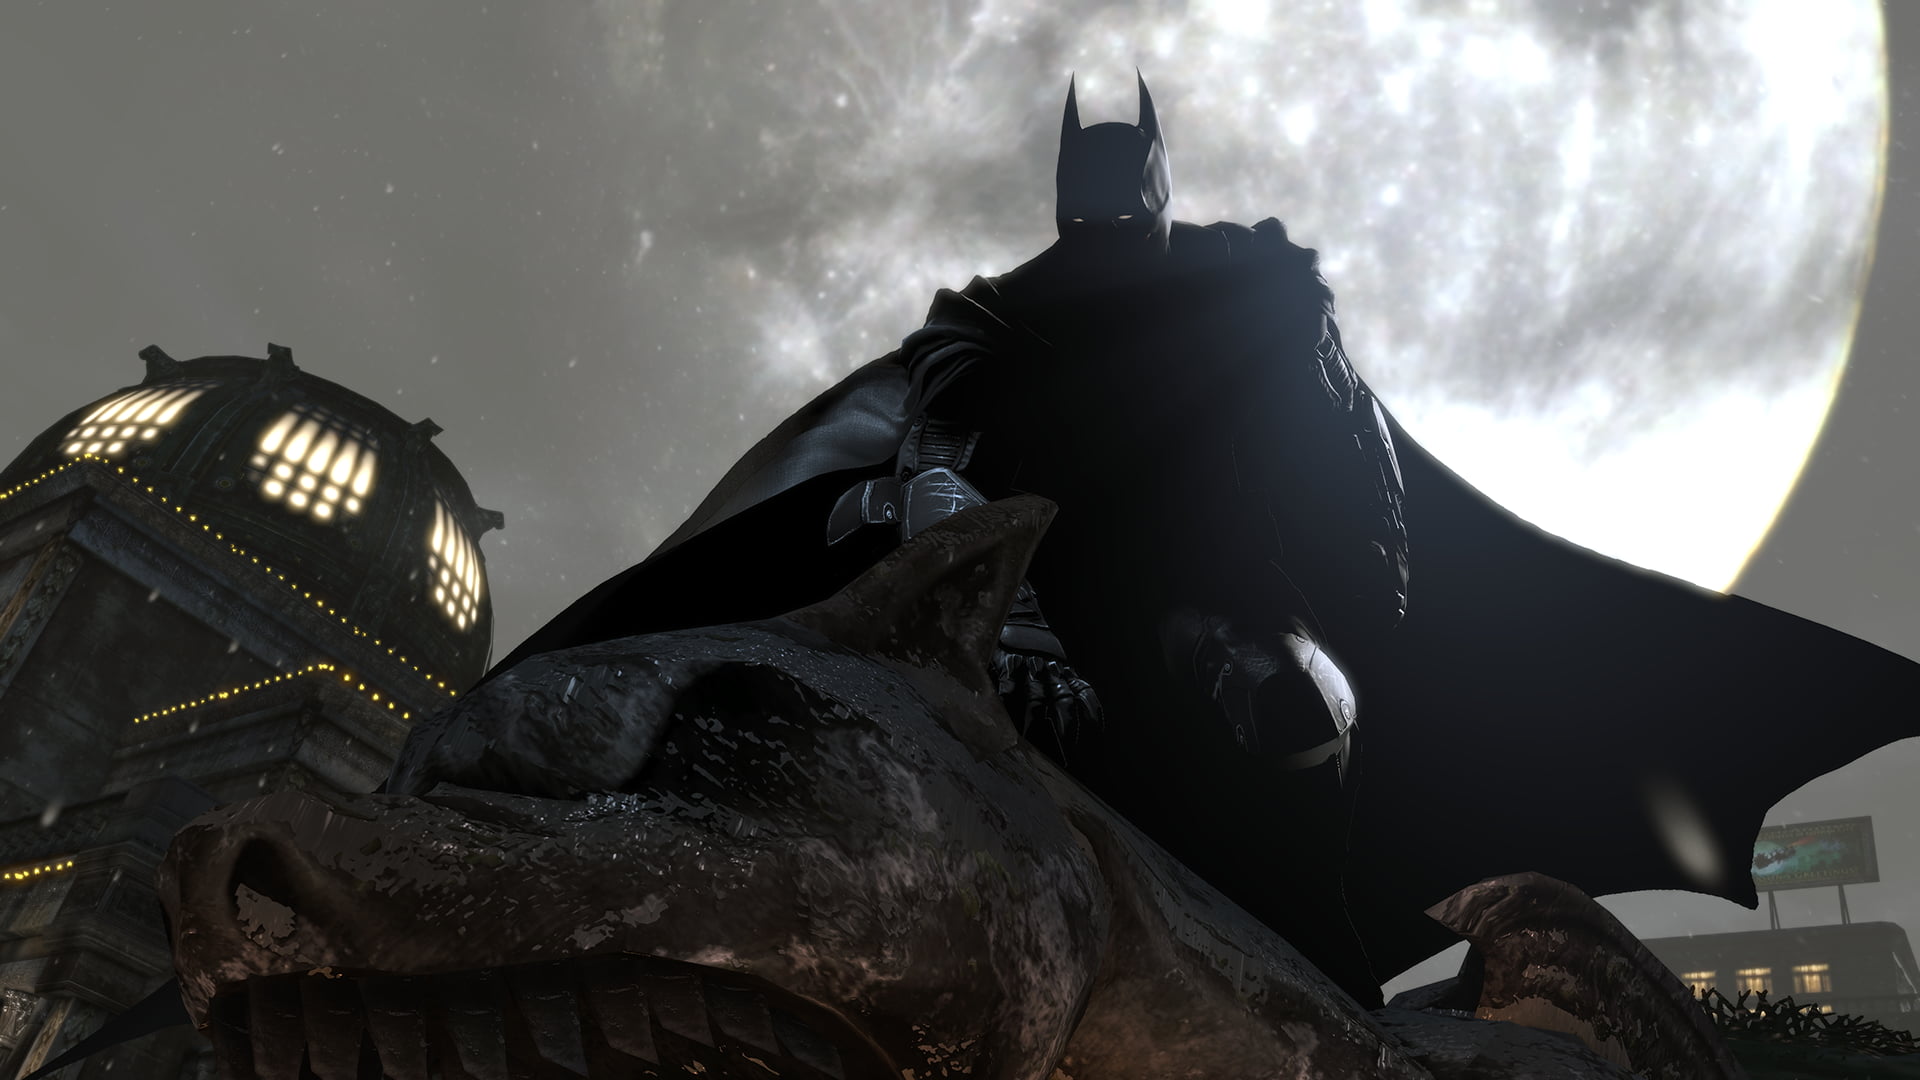 batman arkham knight hd wallpapers 1080p